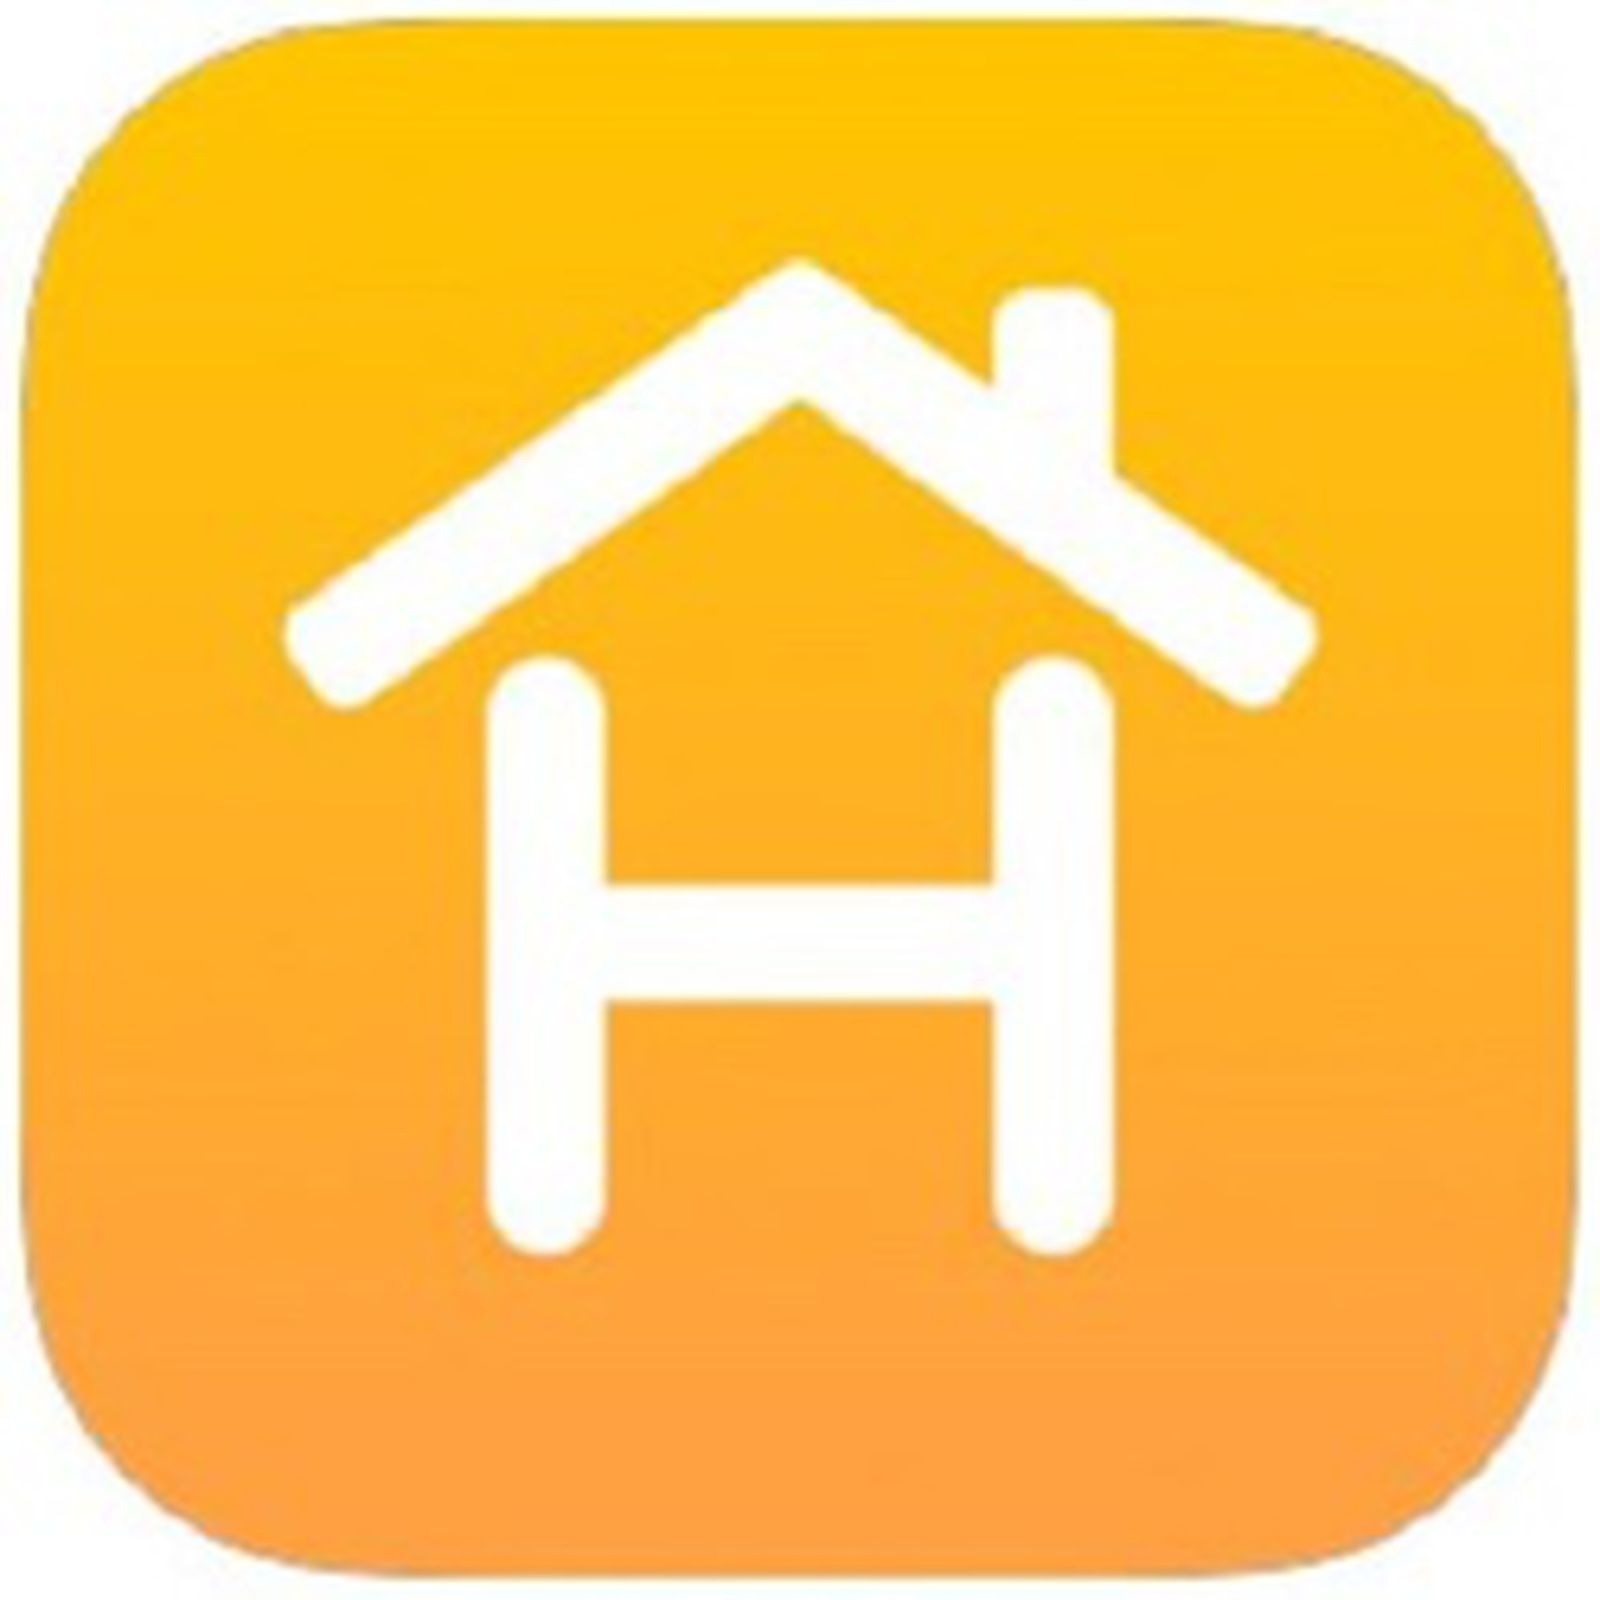 Home app - Apple